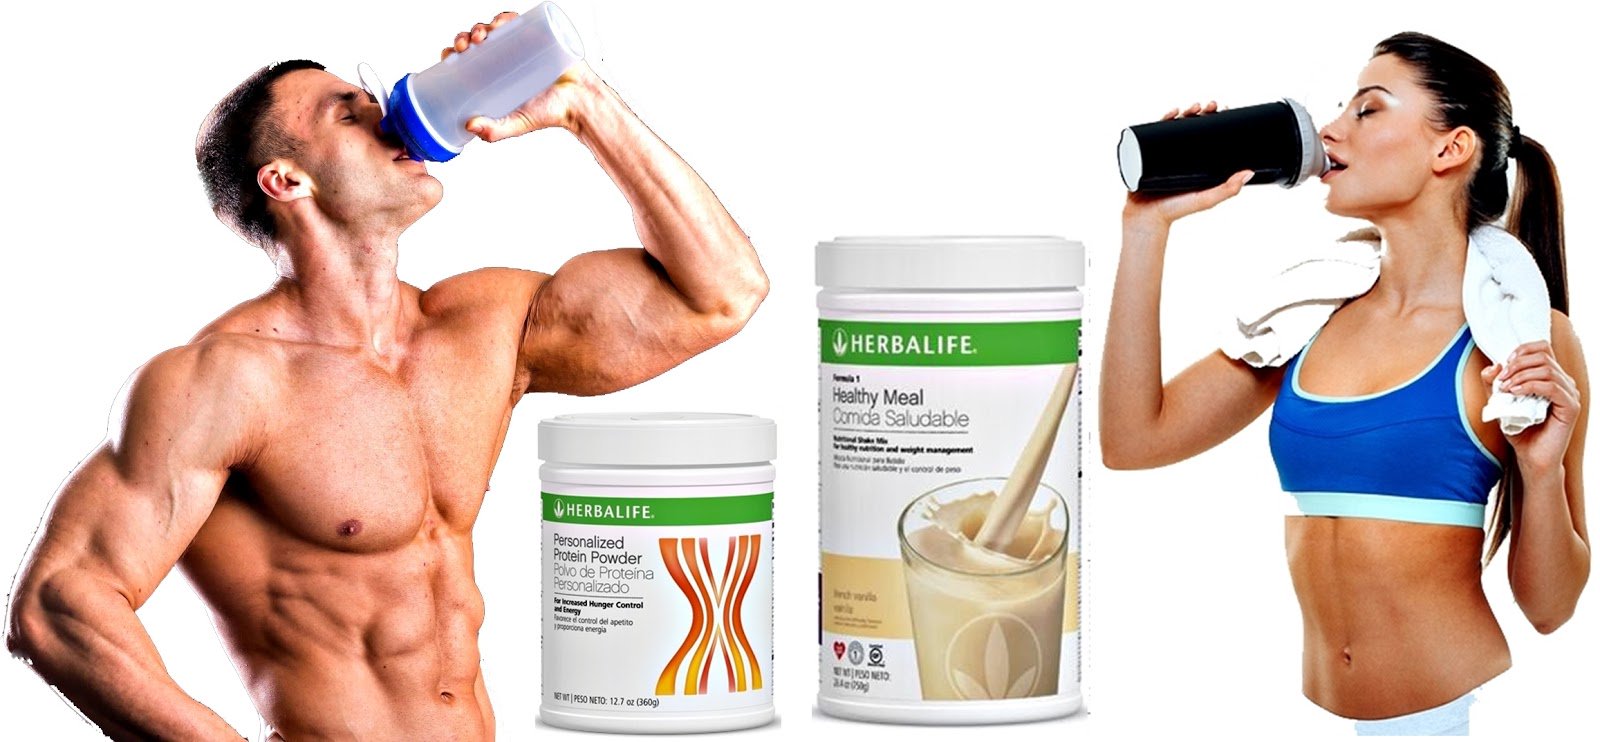 Mejores proteinas para aumentar masa muscular